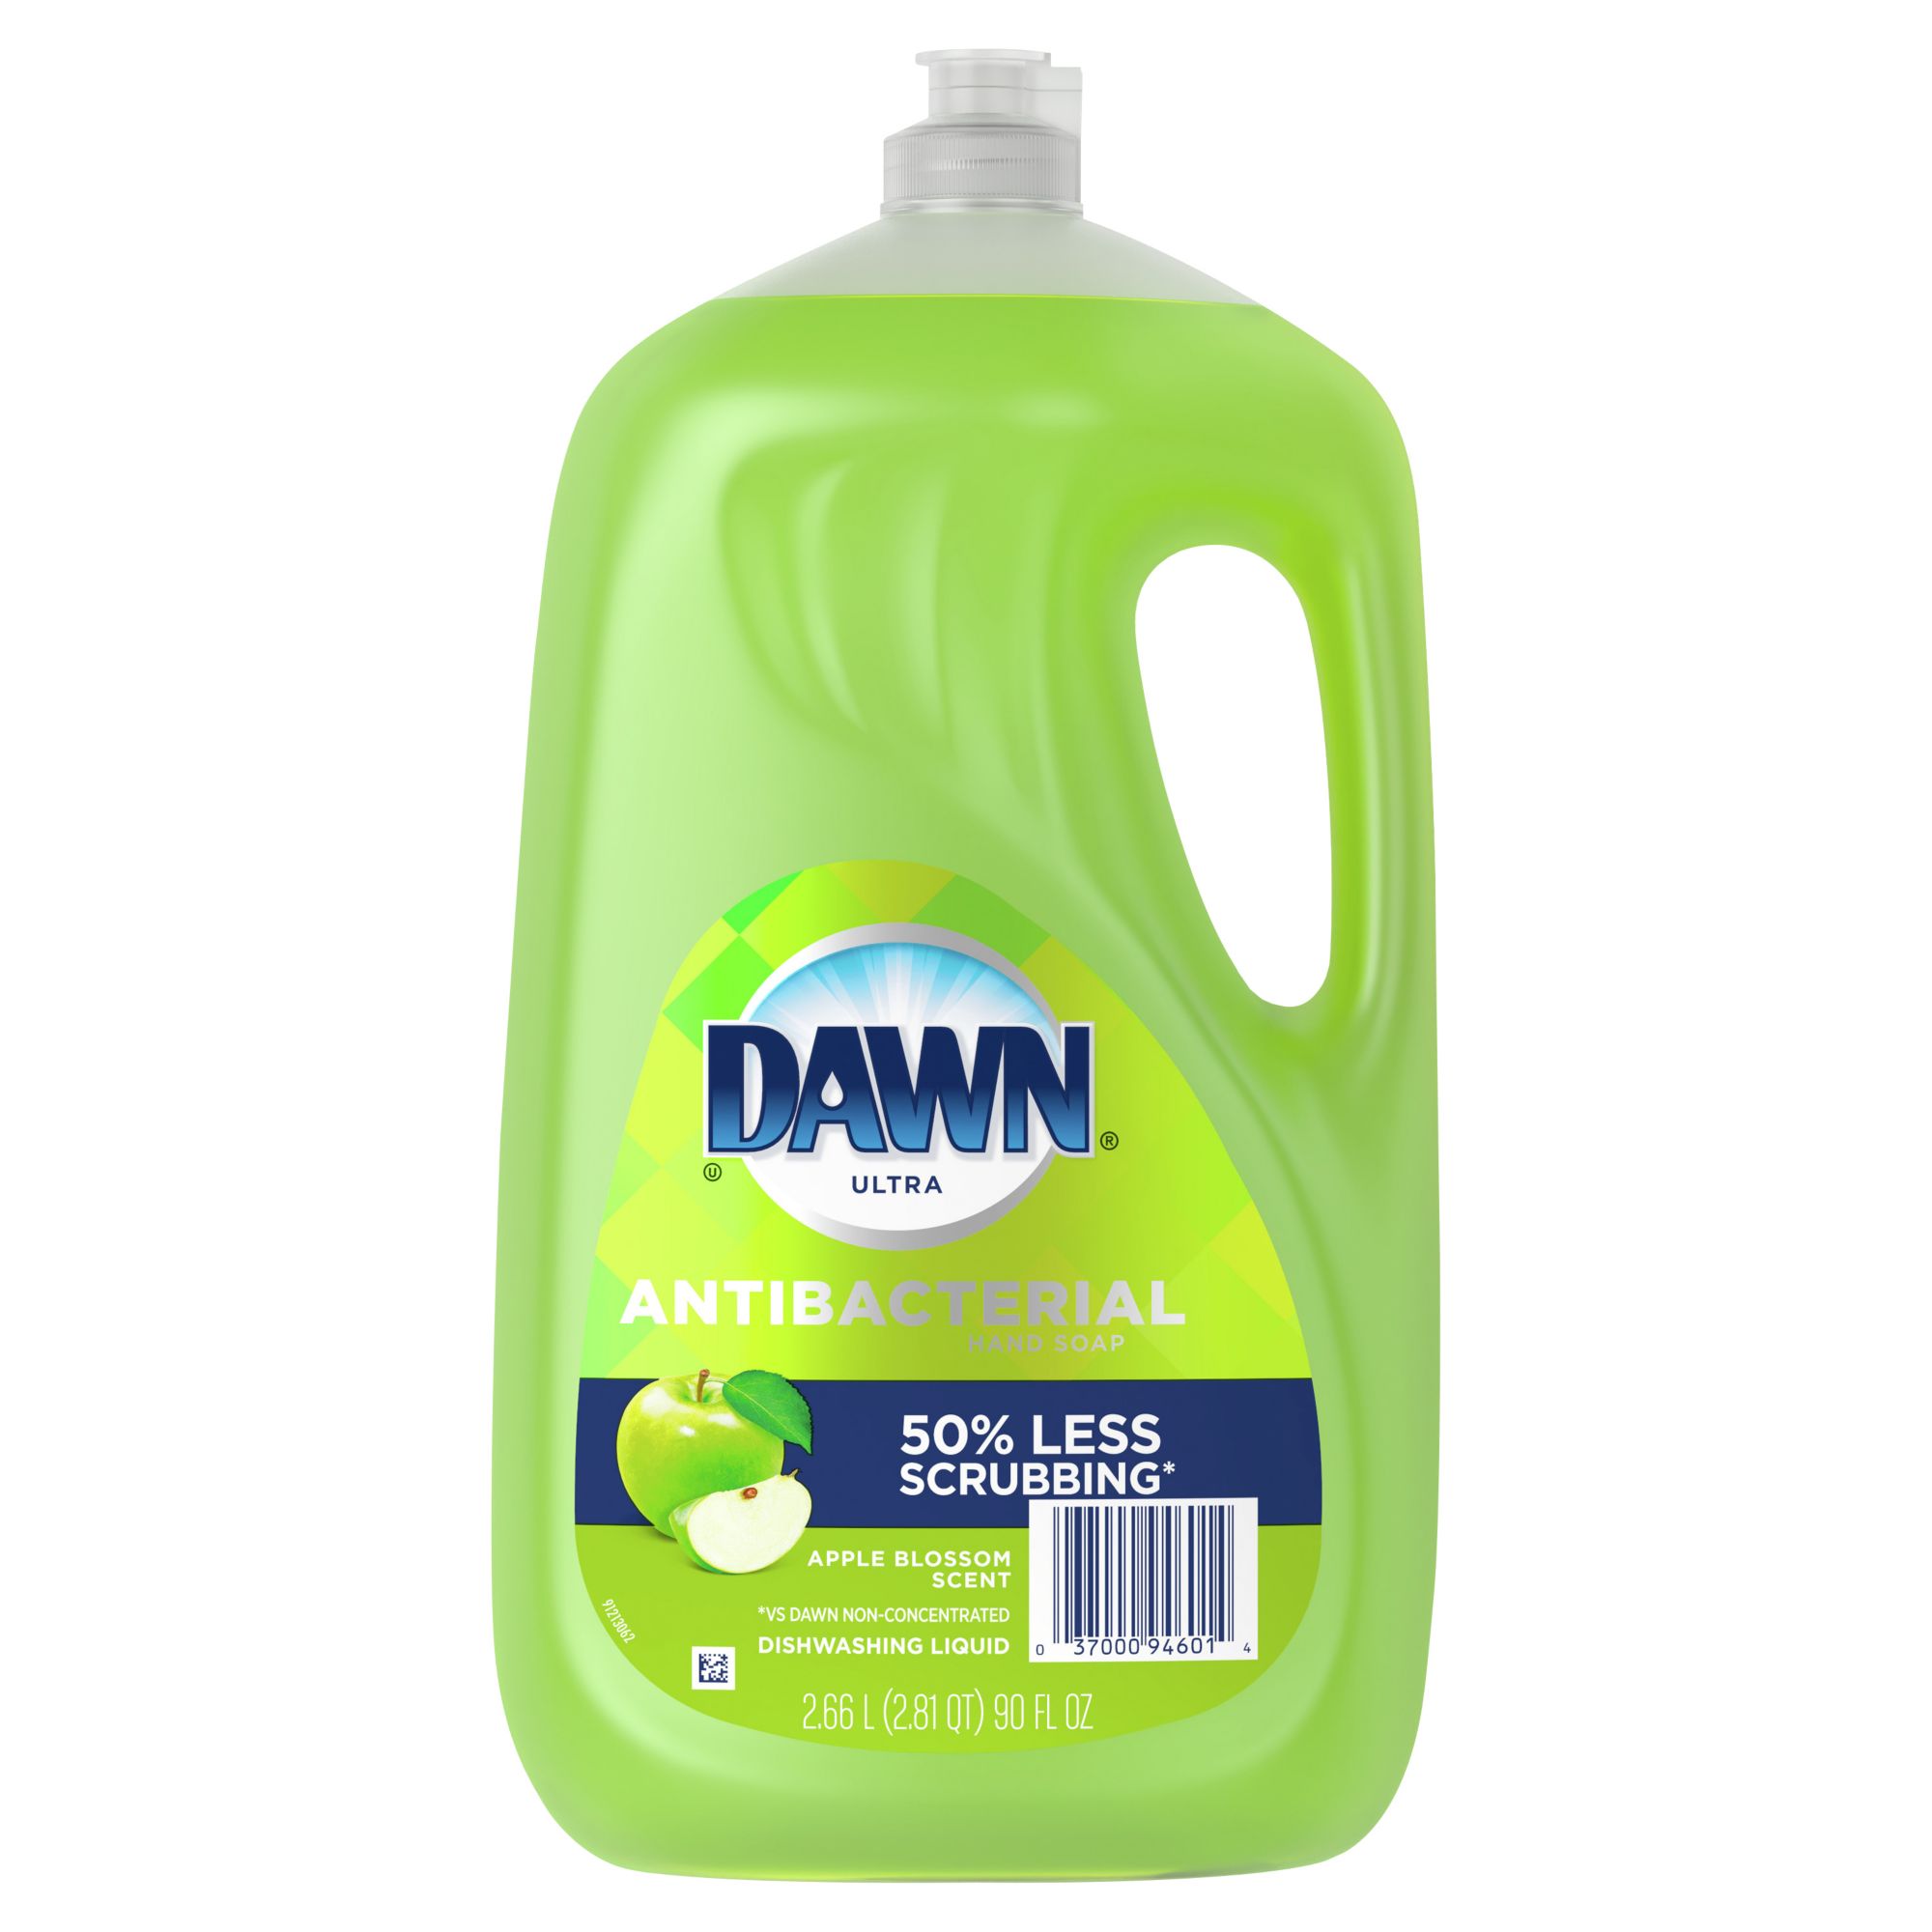 Dawn Ultra Antibacterial Hand Soap, 90 fl. oz. - Apple Blossom